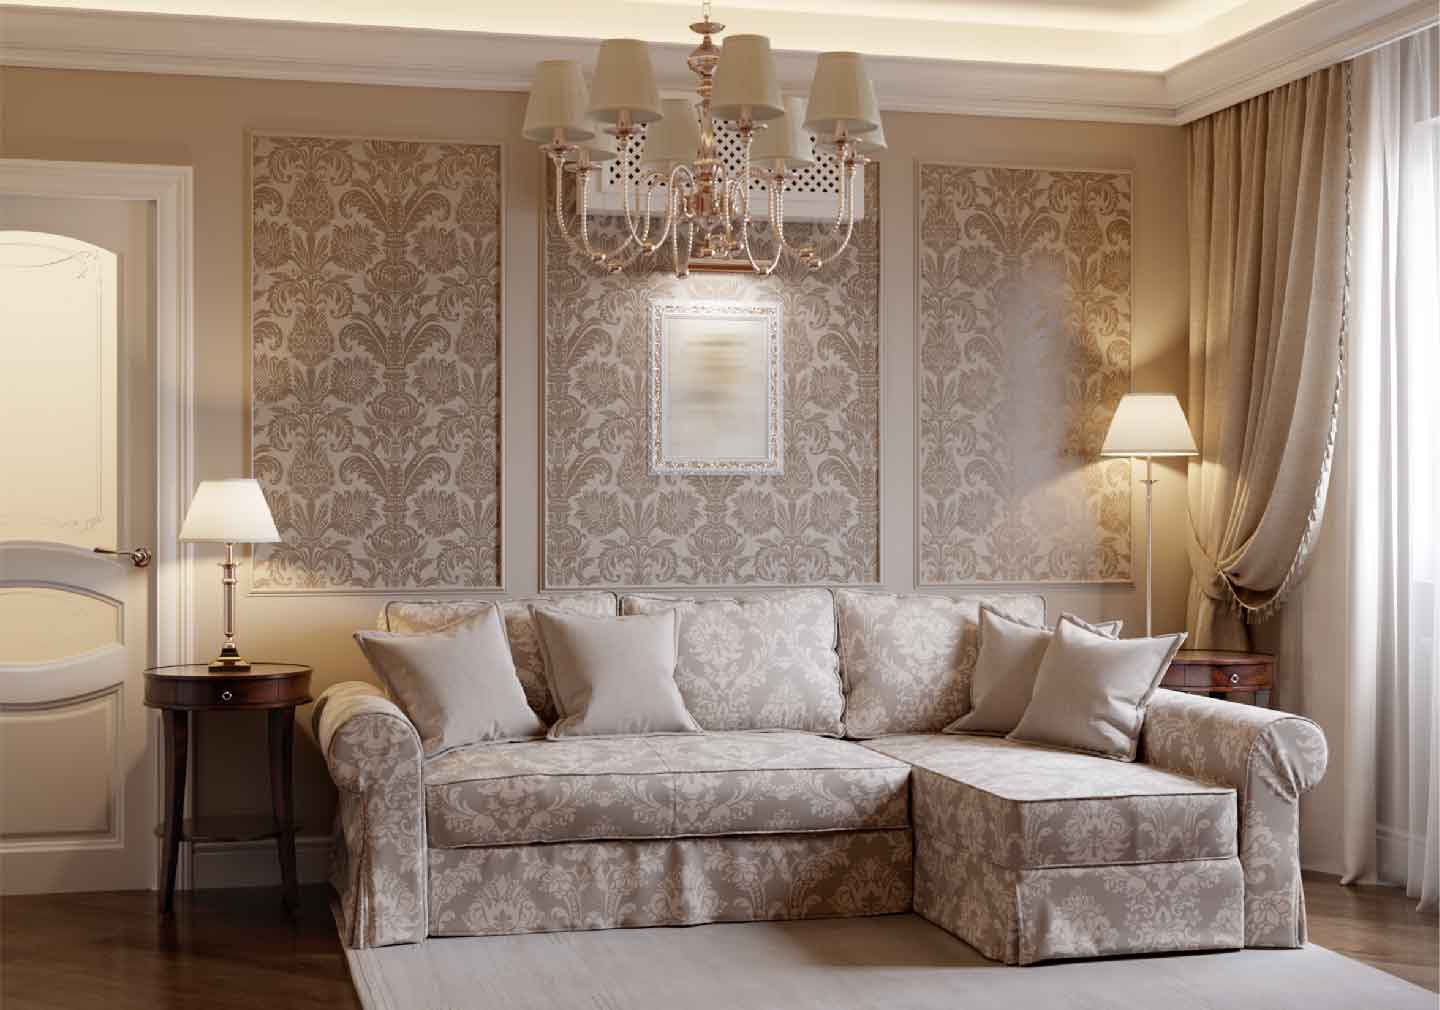 living room interior design with sofa and similar wallpaper at the base wall 